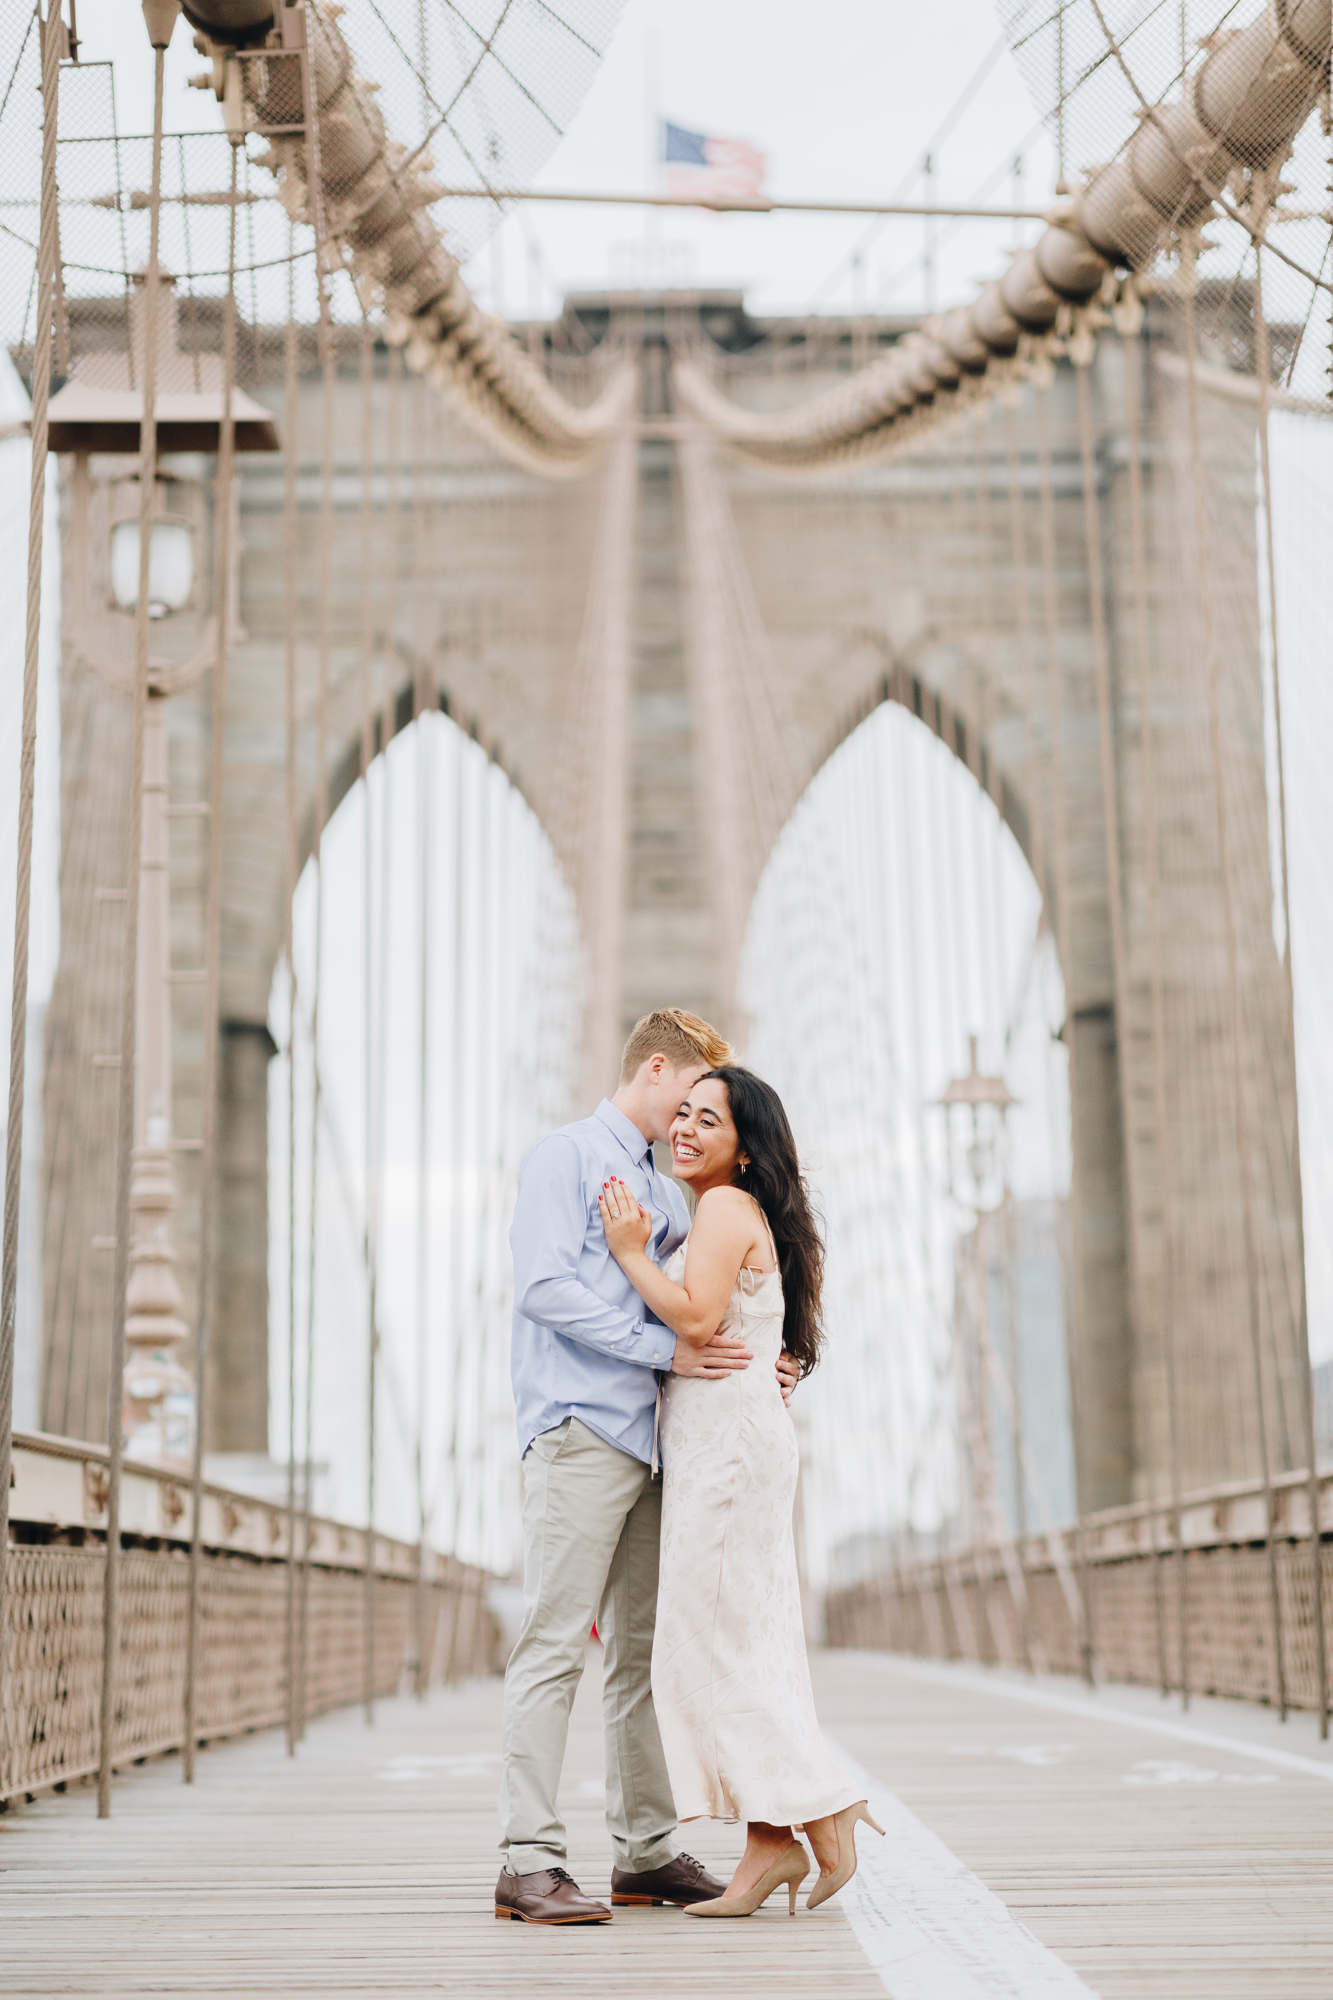 Romantic New York Engagement Photos on the Brooklyn Bridge